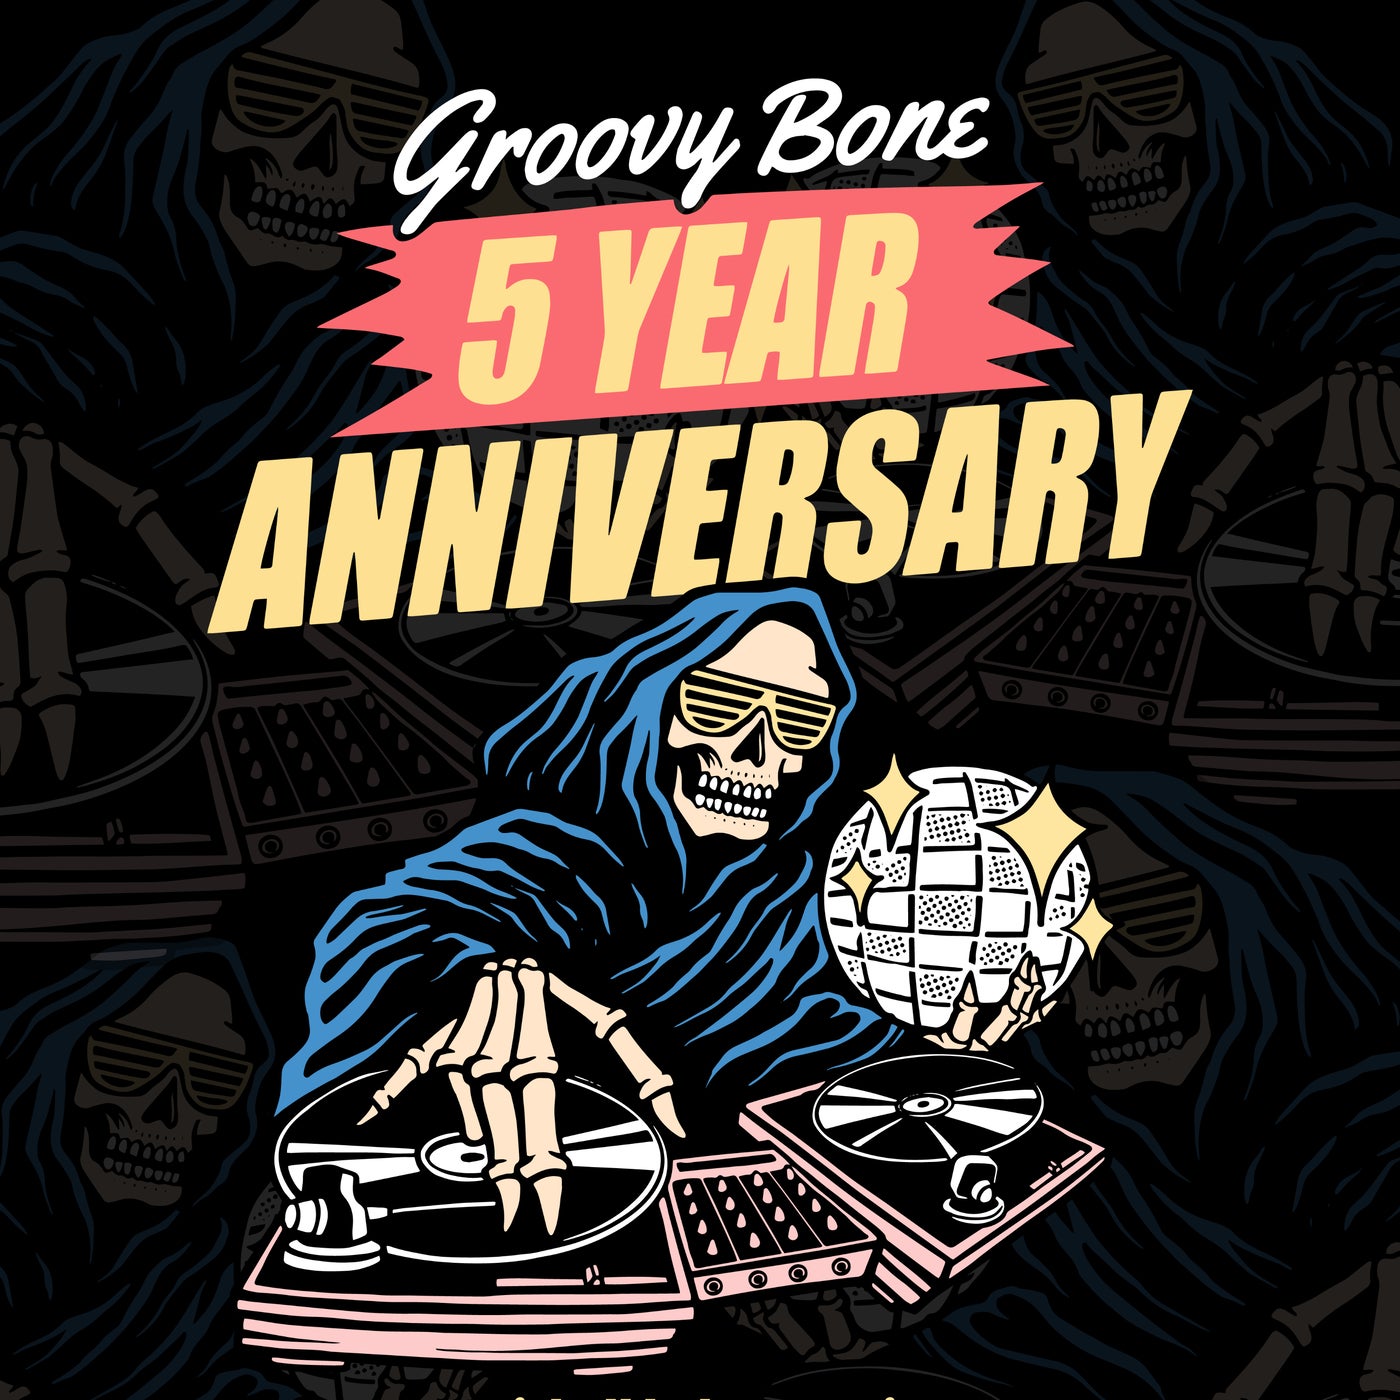 Groovy Bone 5 Year Anniversary